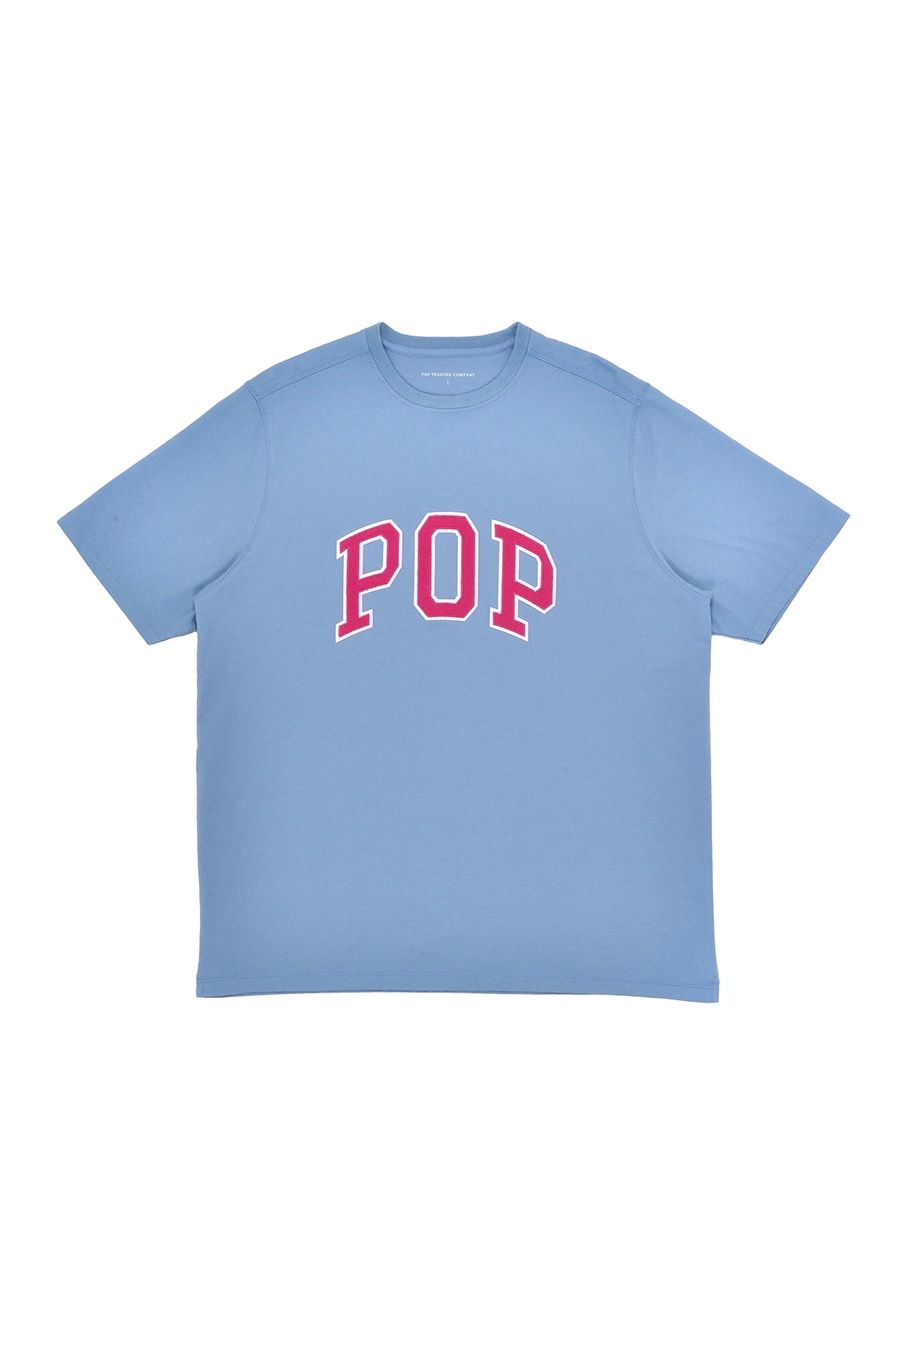 Pop Trading Company - arch t-shirt -blue shadow- 23ss drop1 | asterisk